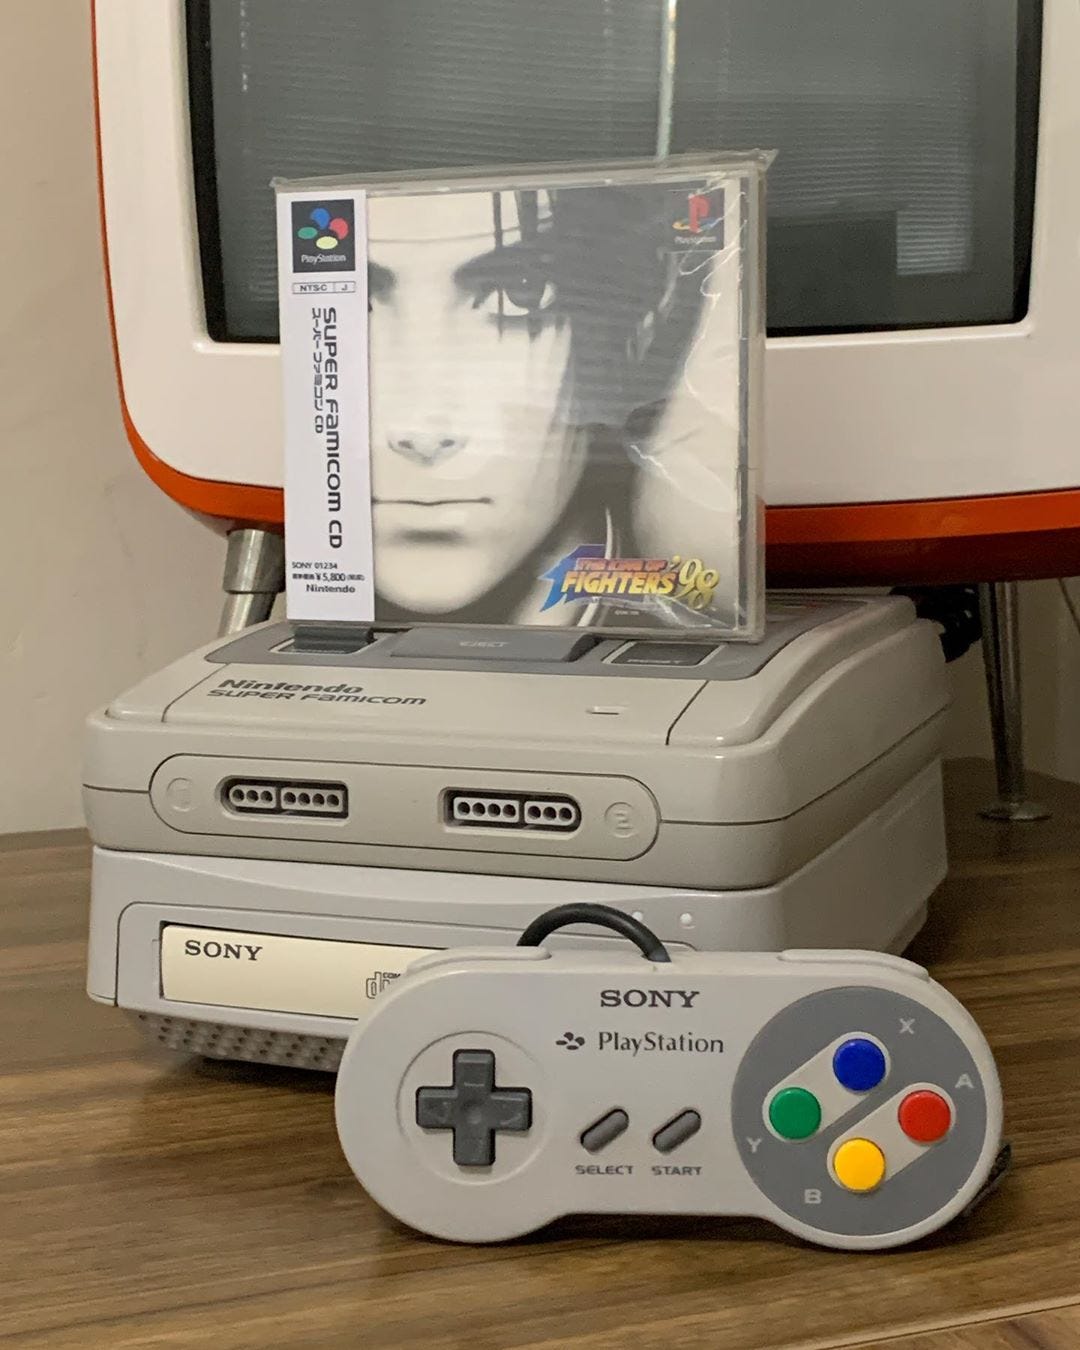 SNES CD-ROM, Nintendo